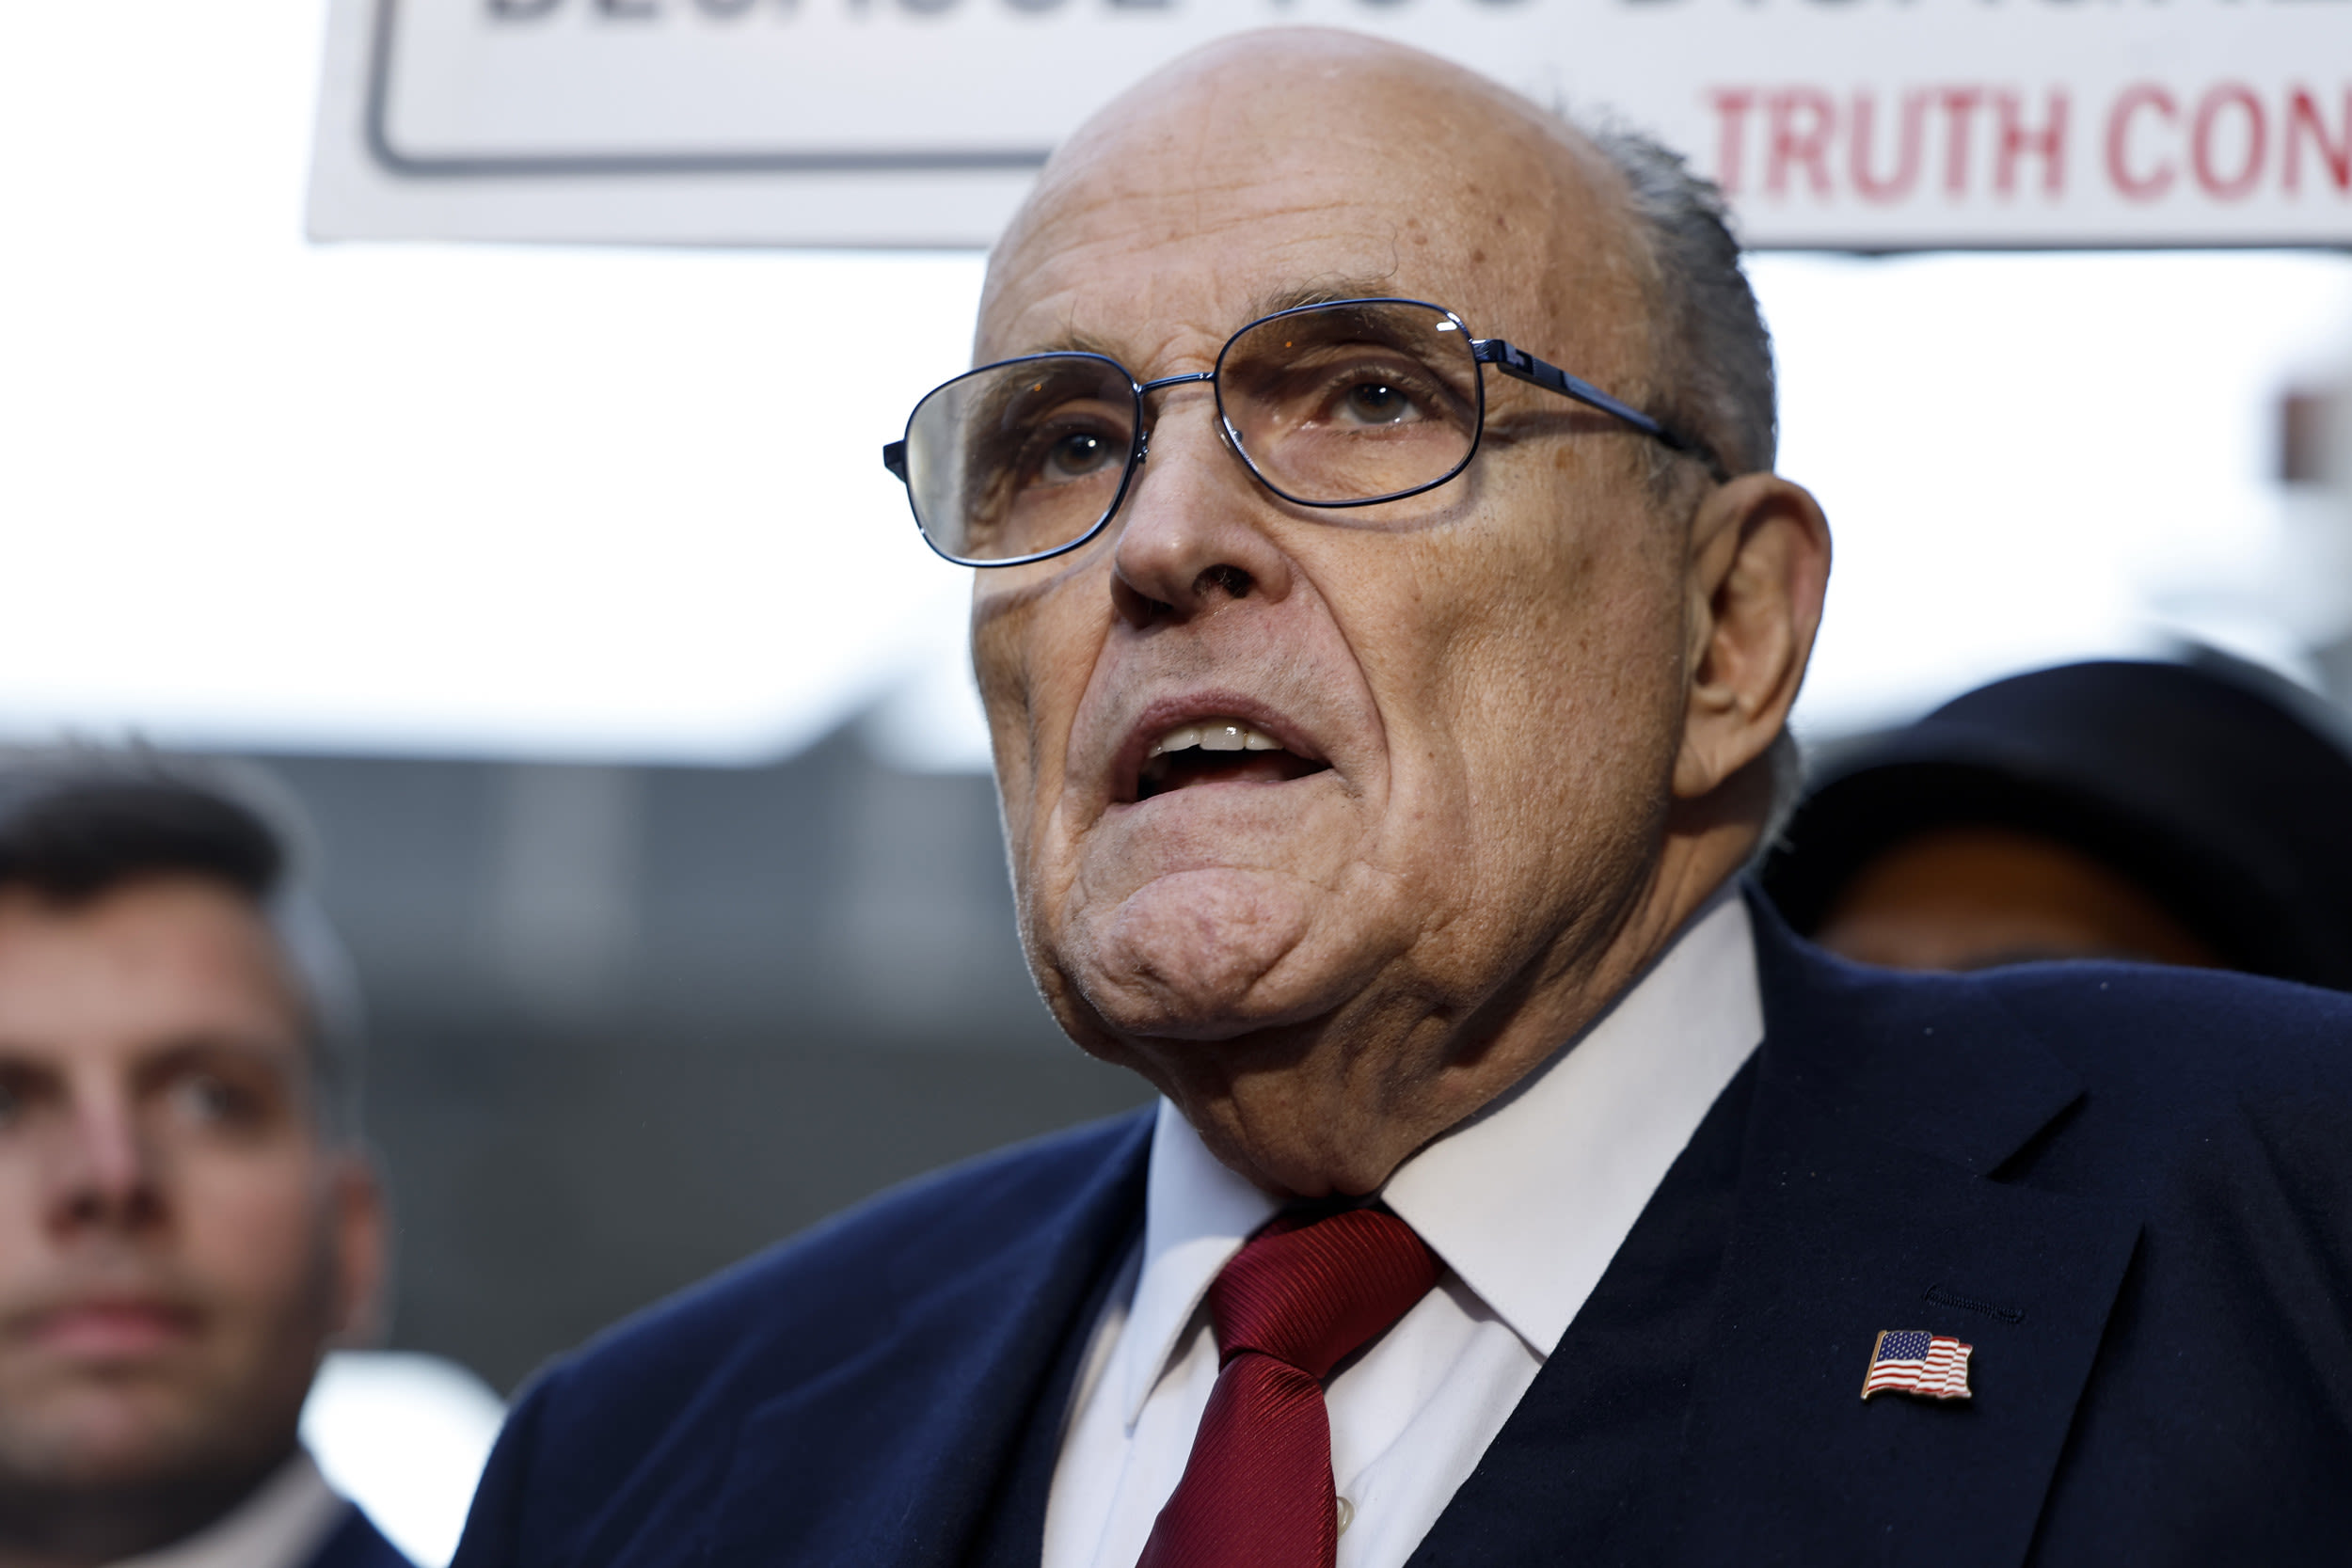 Rudy Giuliani disbarred